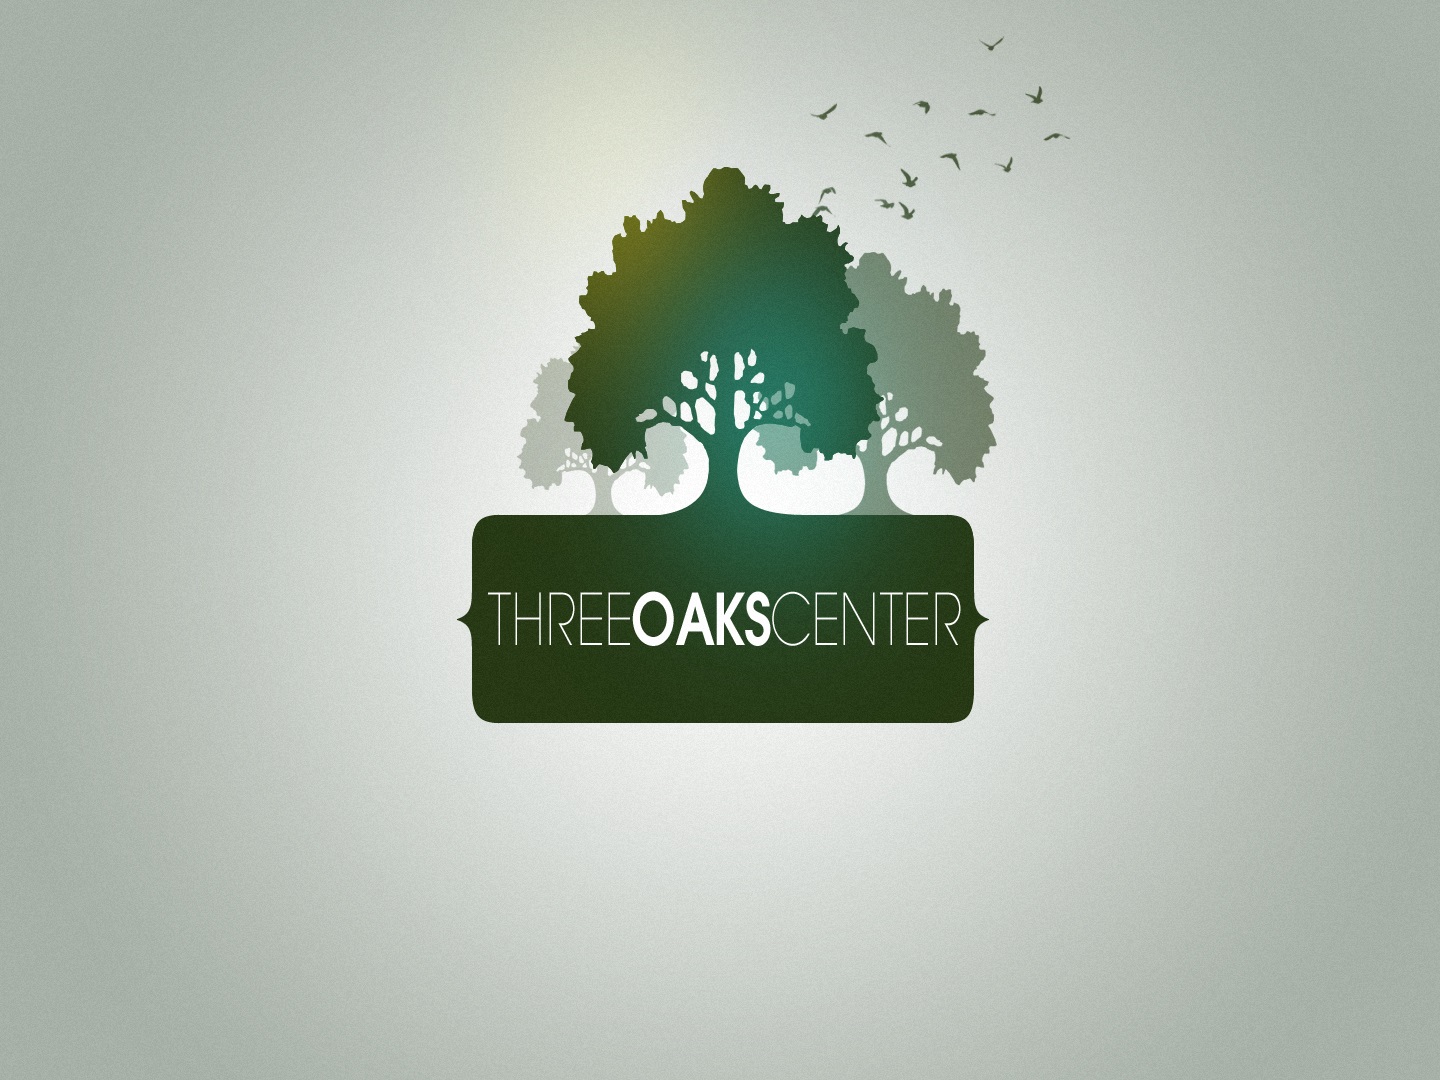 Three Oaks Center